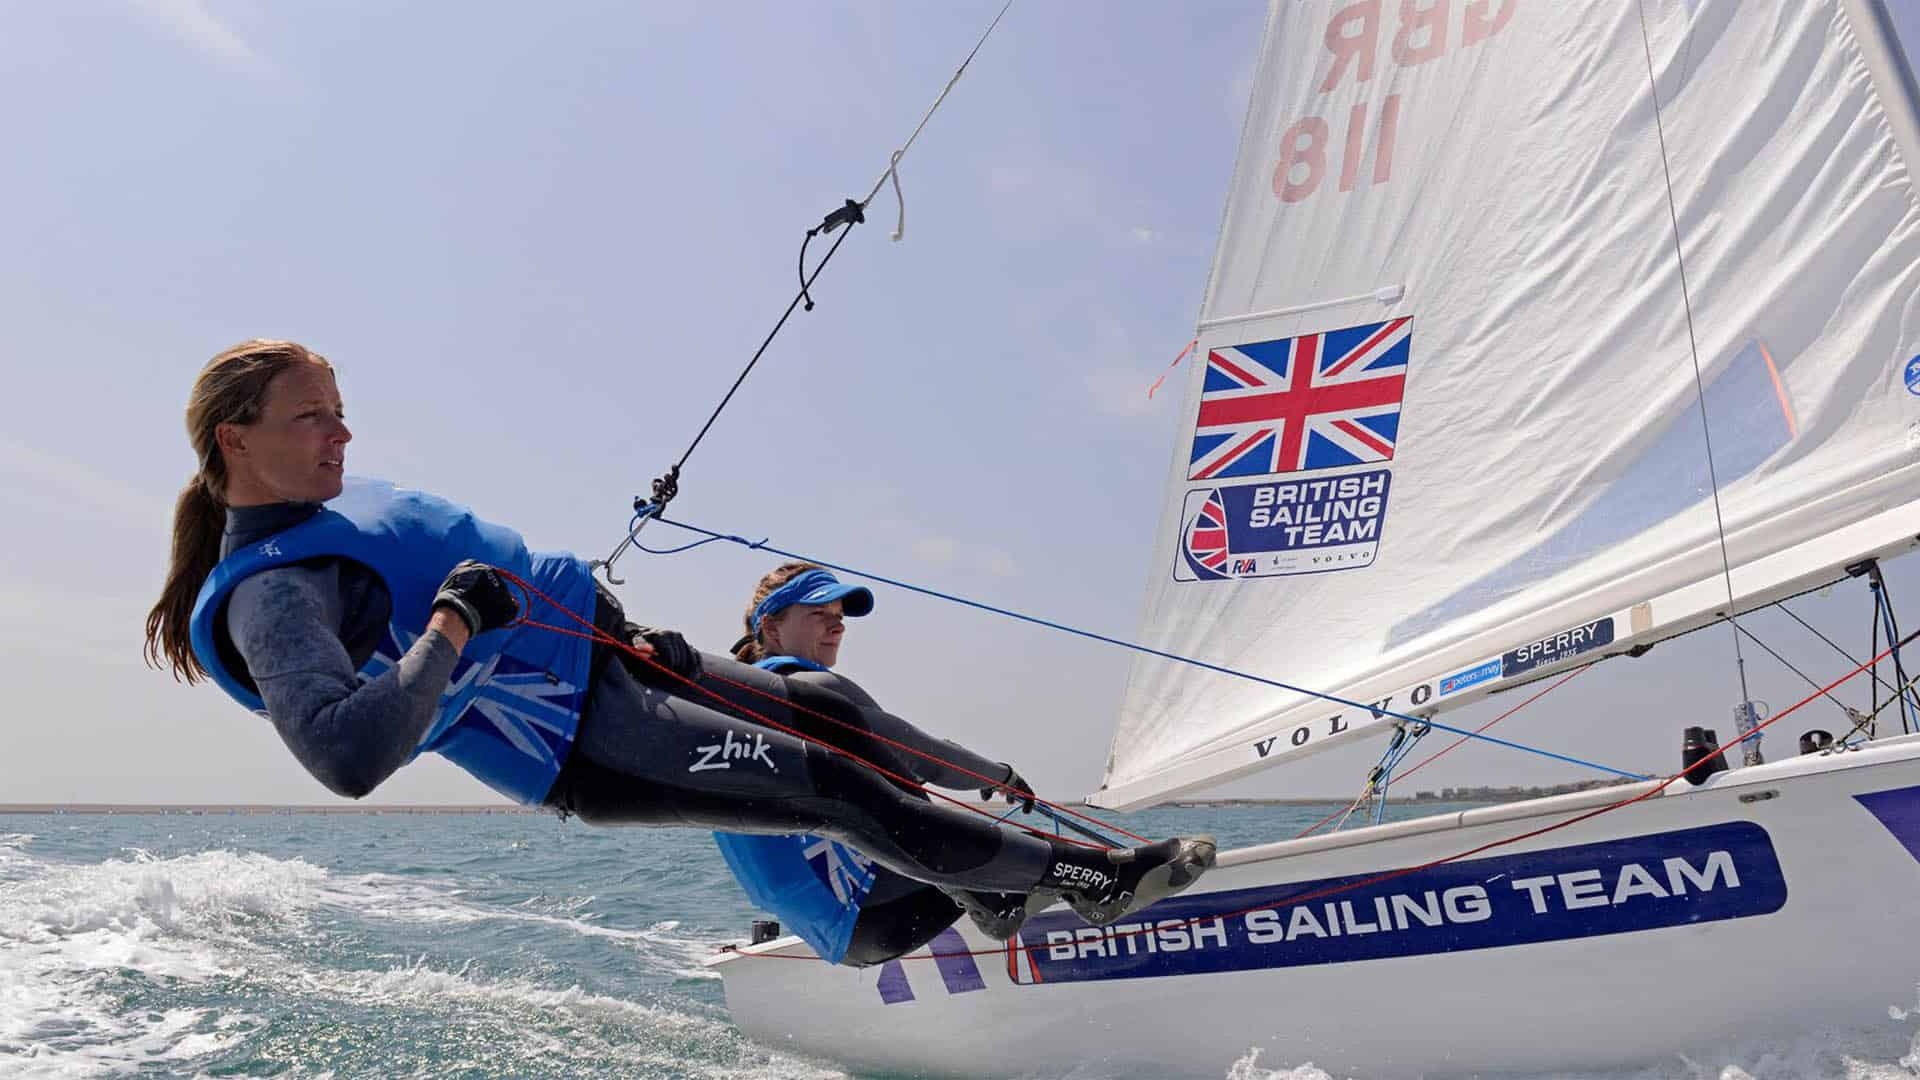 Sailing: Sport, Performance, University of Chichester, British sailing team. 1920x1080 Full HD Wallpaper.